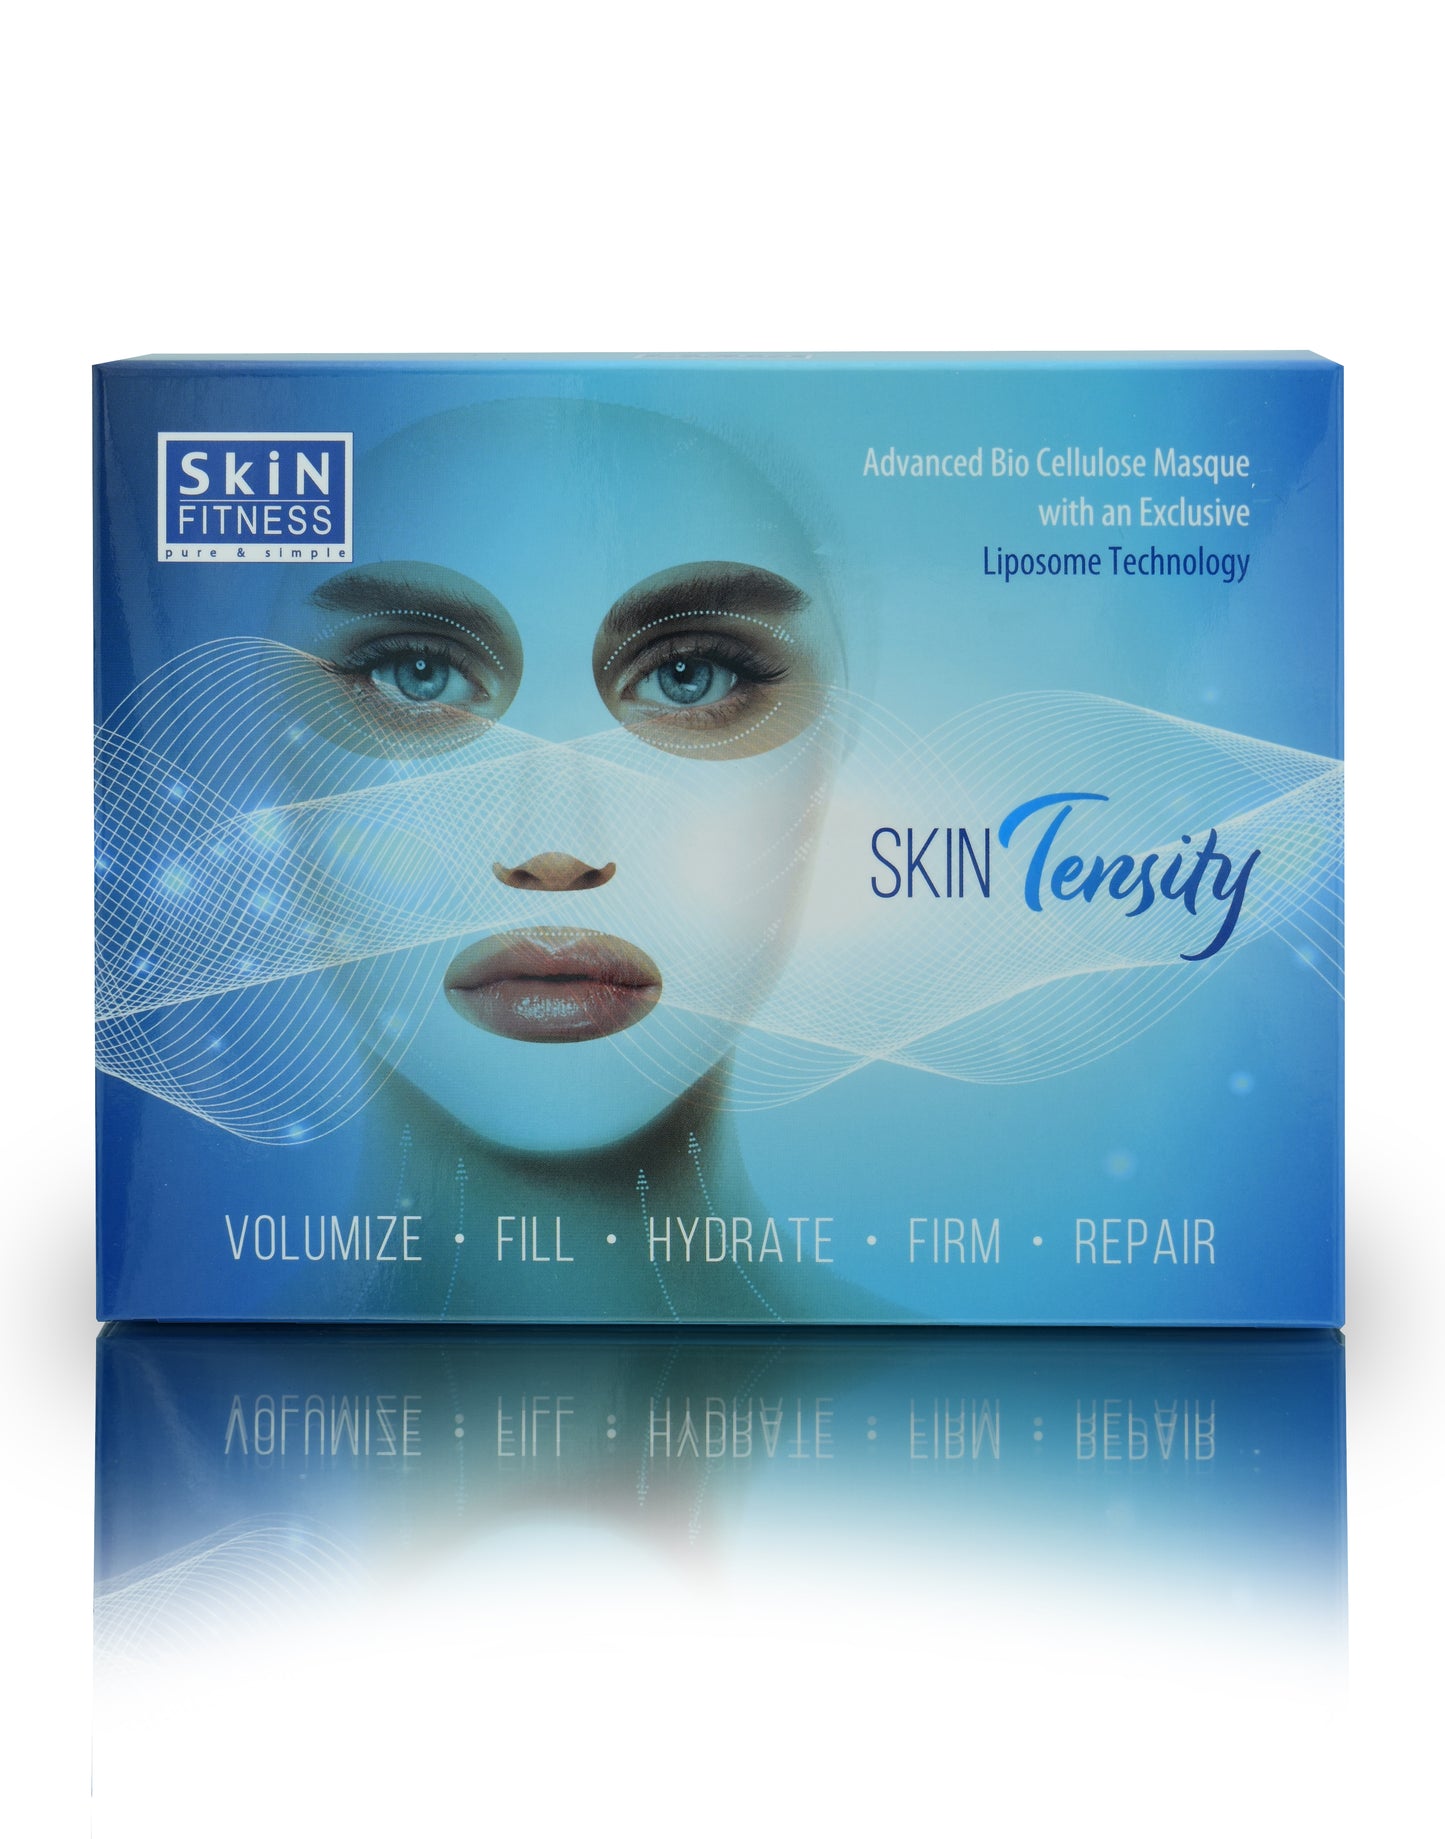 SkinTensity Advanced Bio Cellulose Masque